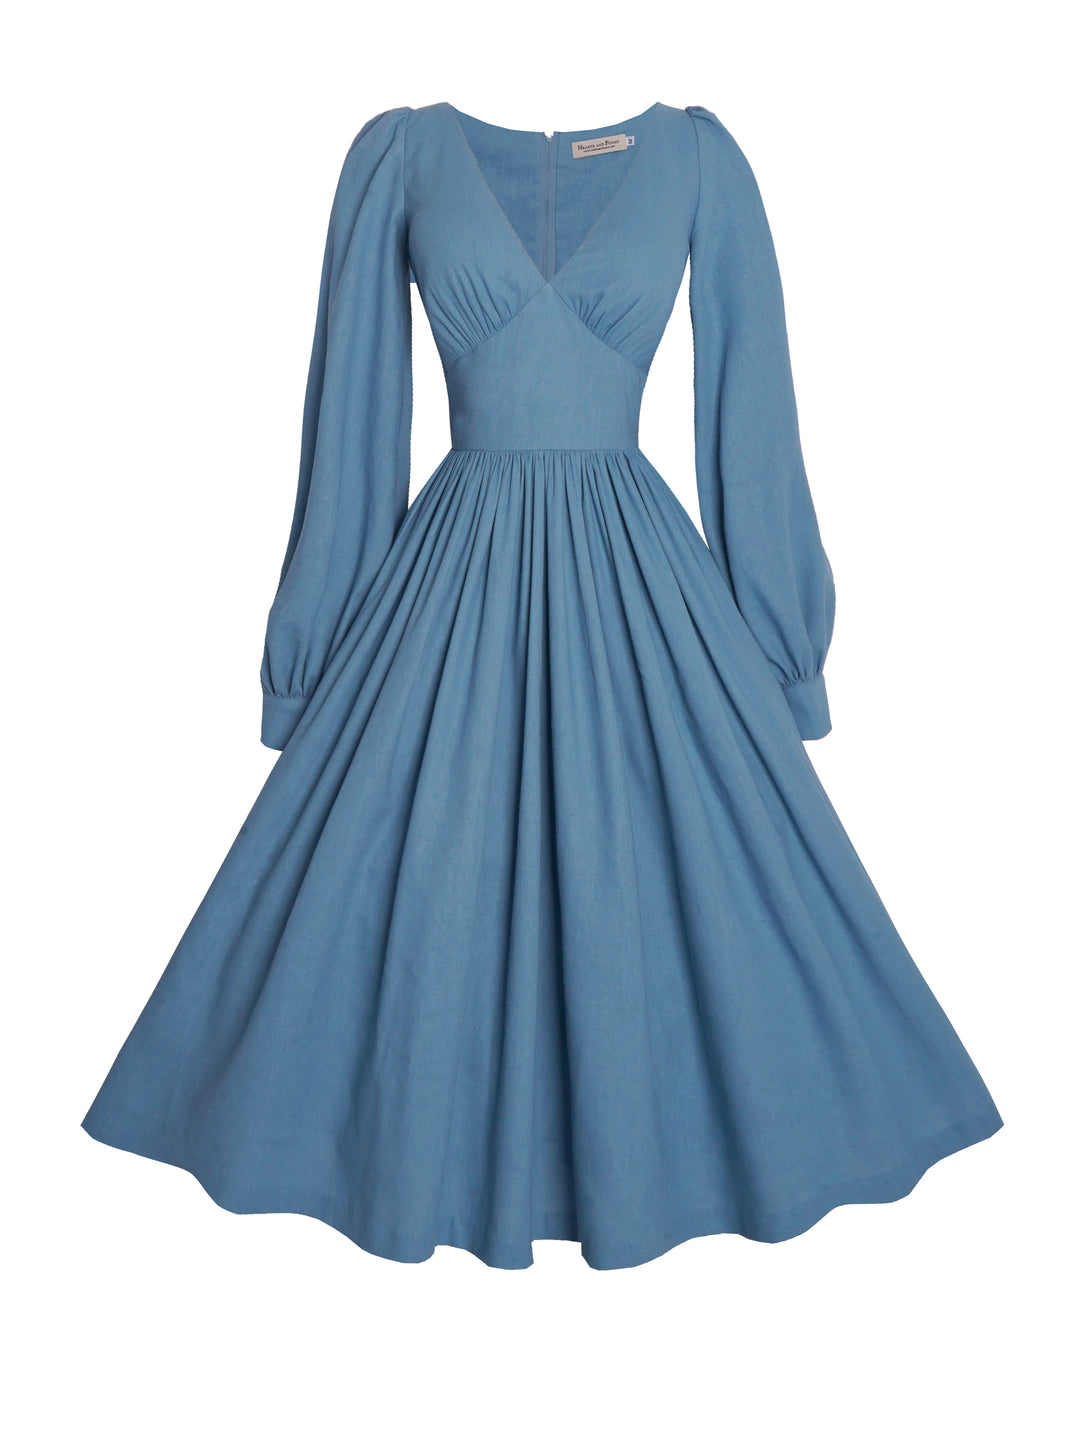 Choose a fabric: Harlow Dress